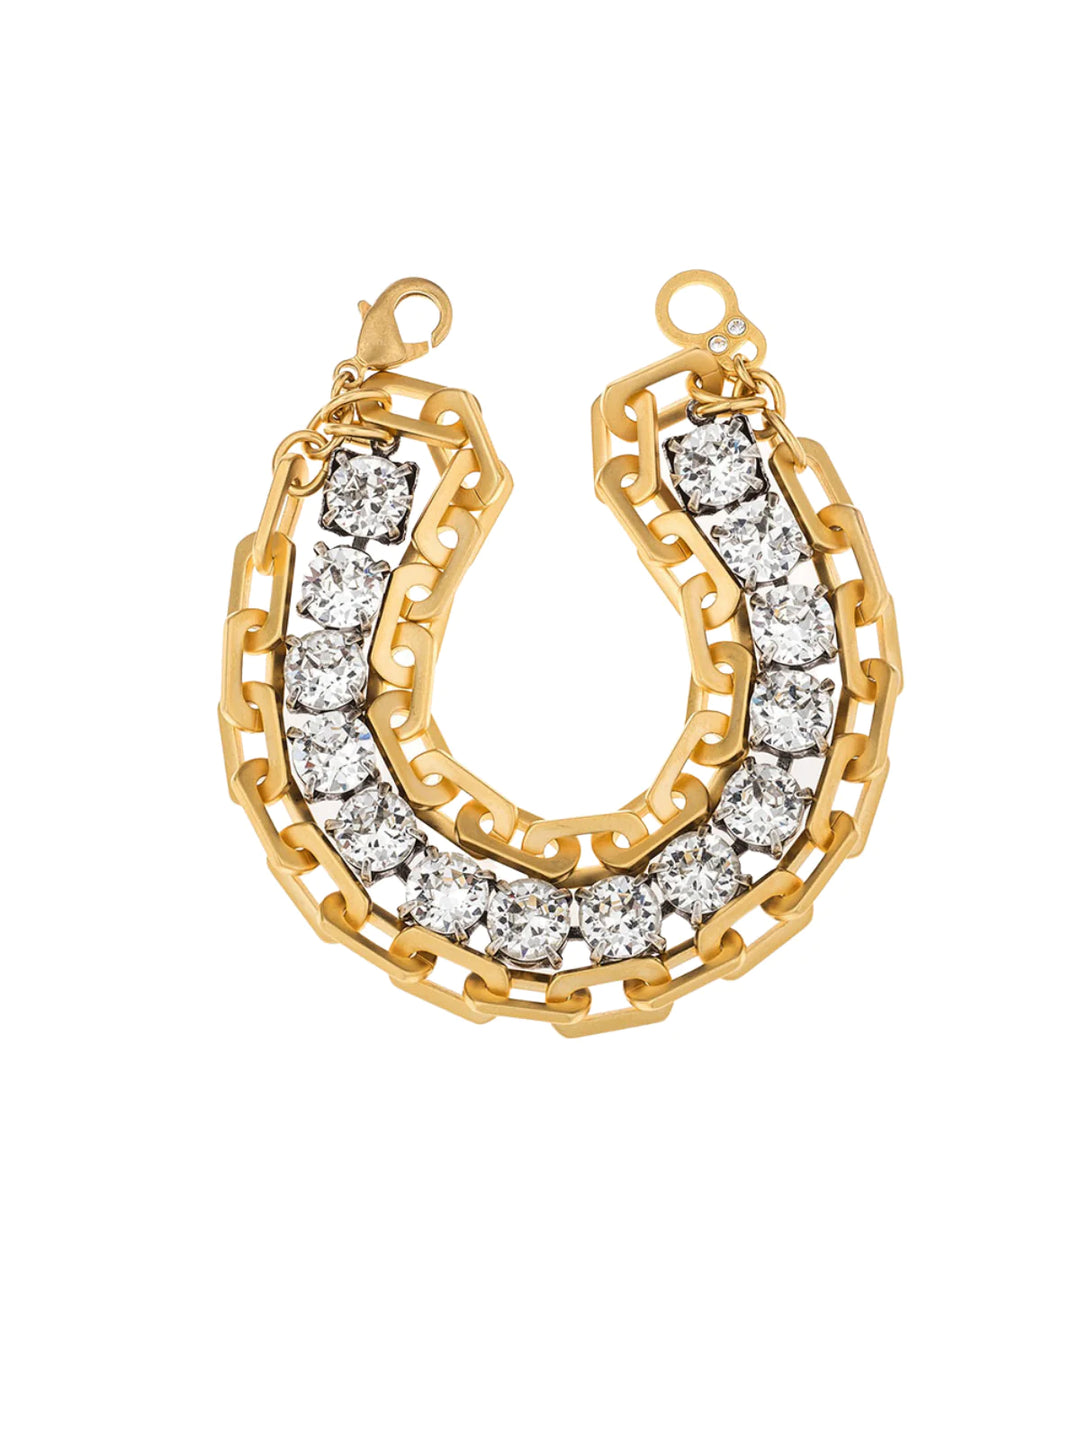 Triple Strand Gold Honfleur Chain & Clear Euro Crystal Bracelet